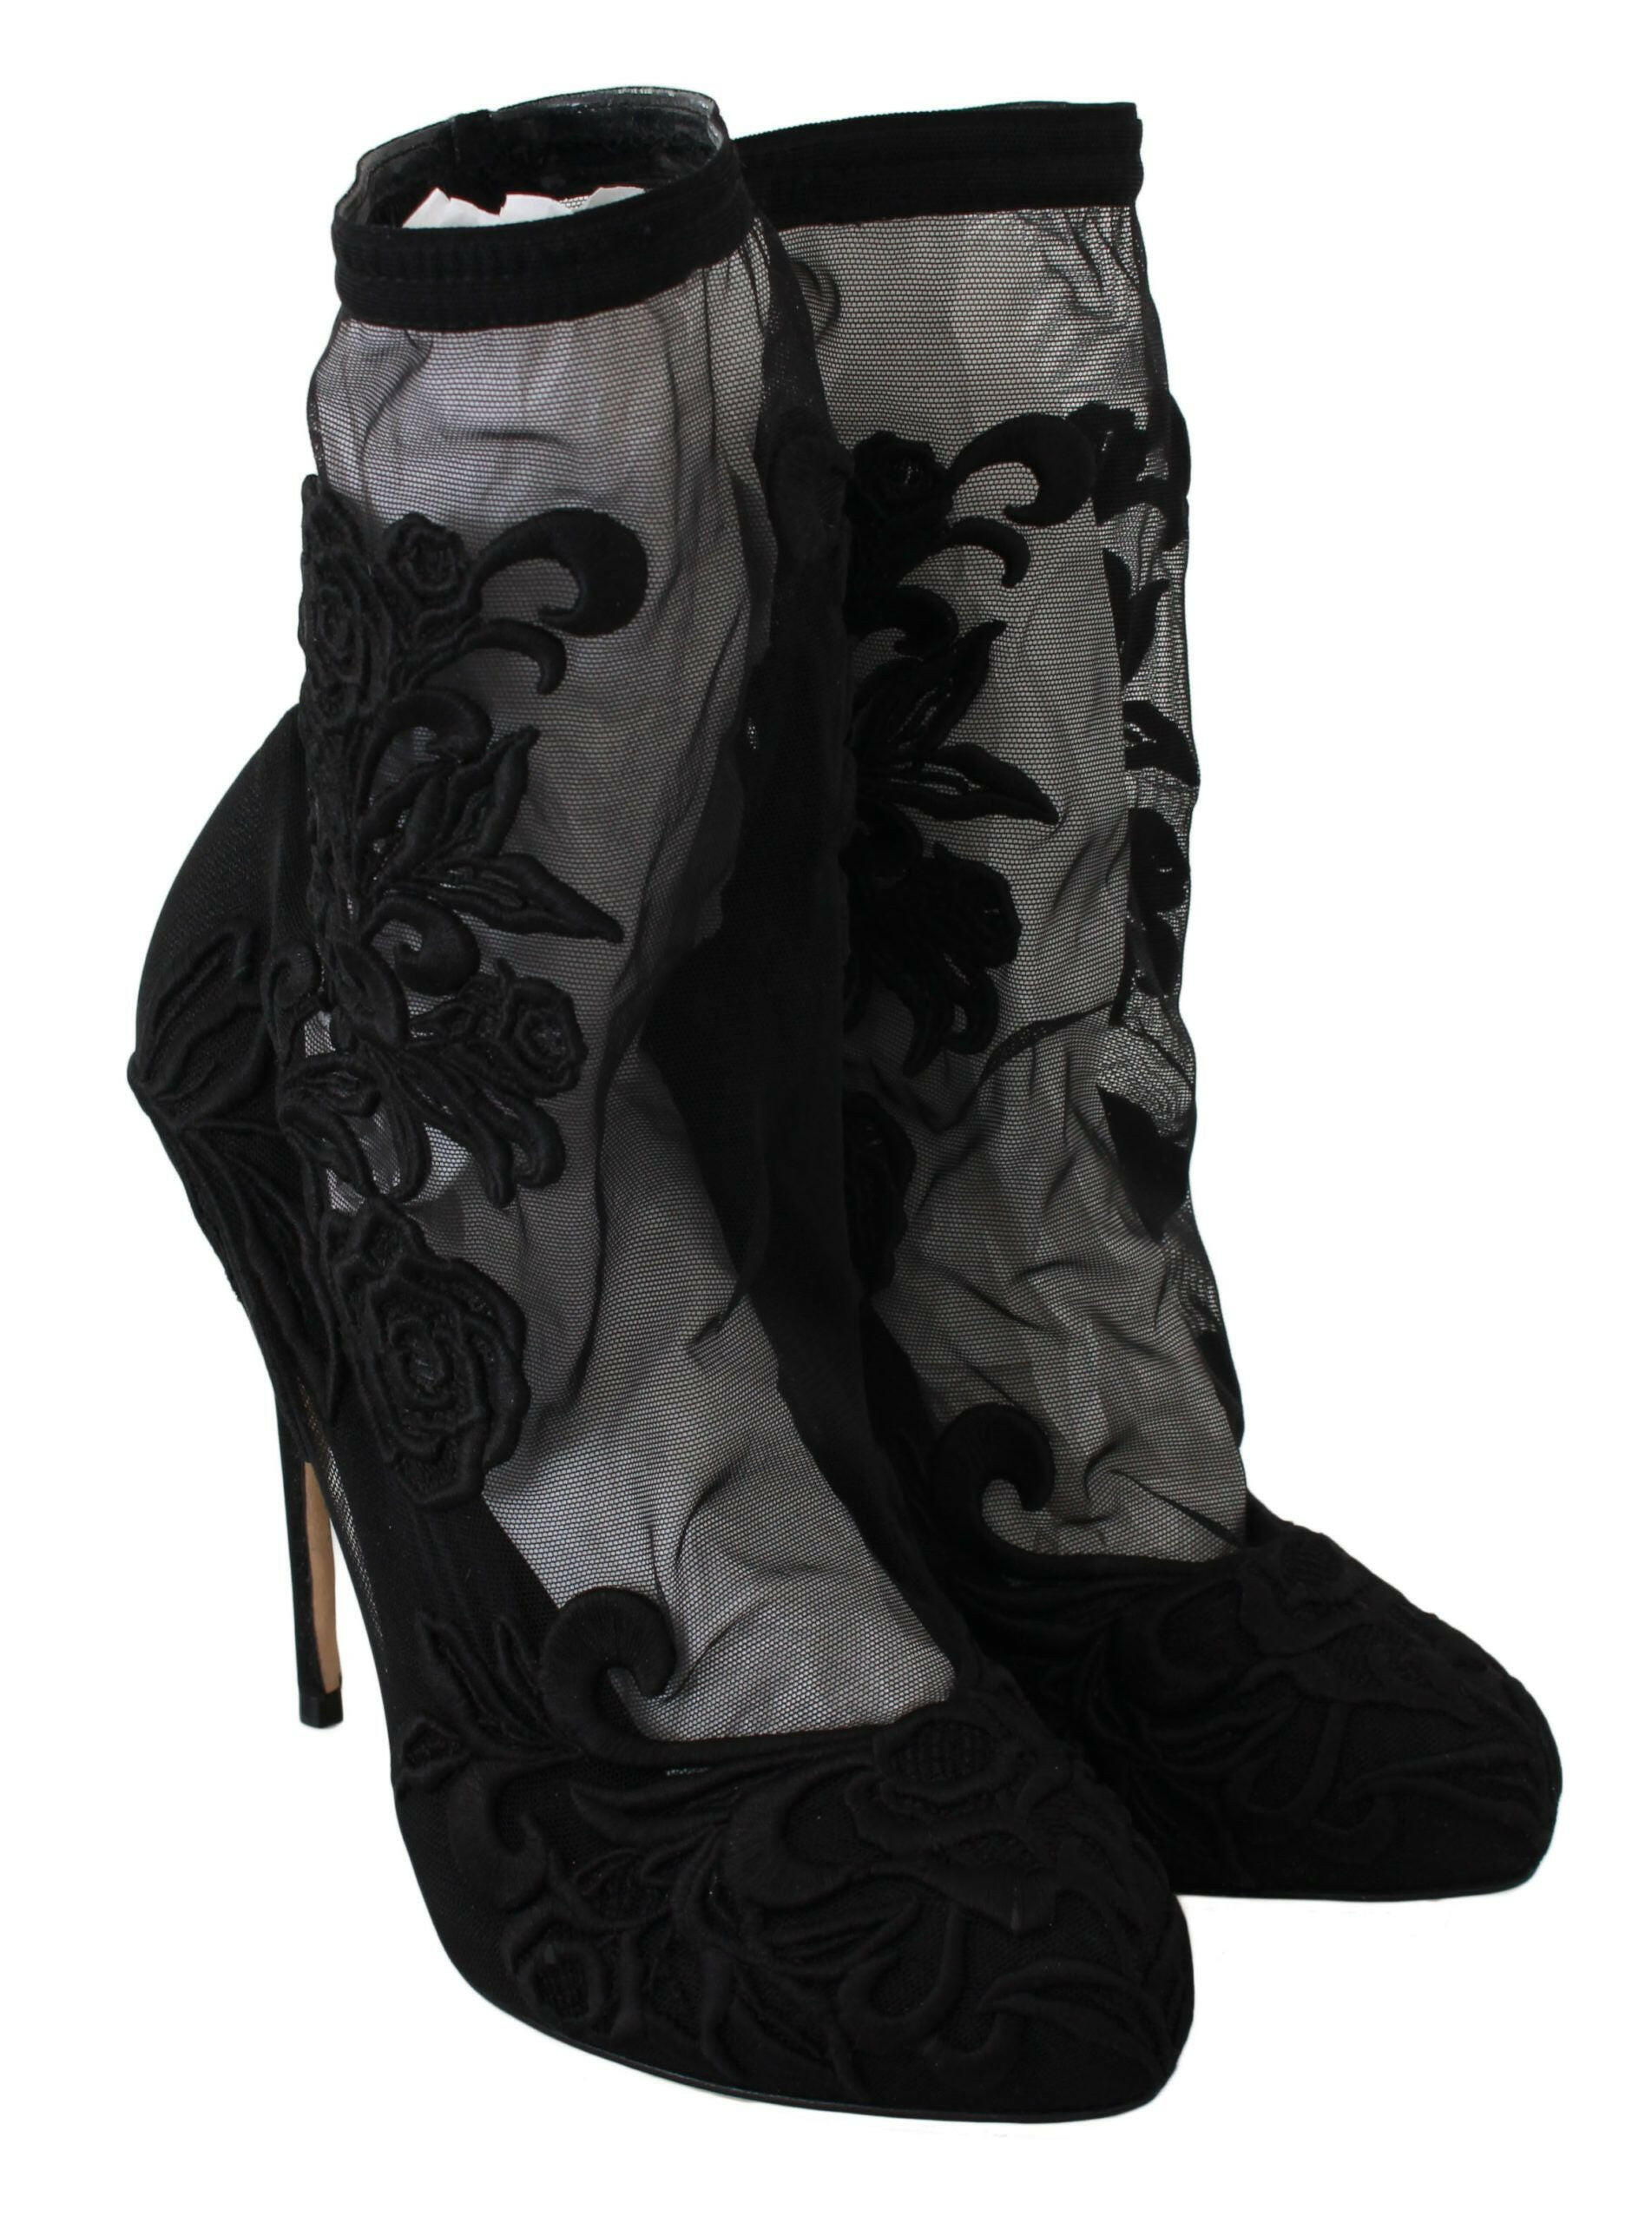 Dolce & Gabbana Black Roses Stilettos Booties Socks Shoes - GENUINE AUTHENTIC BRAND LLC  